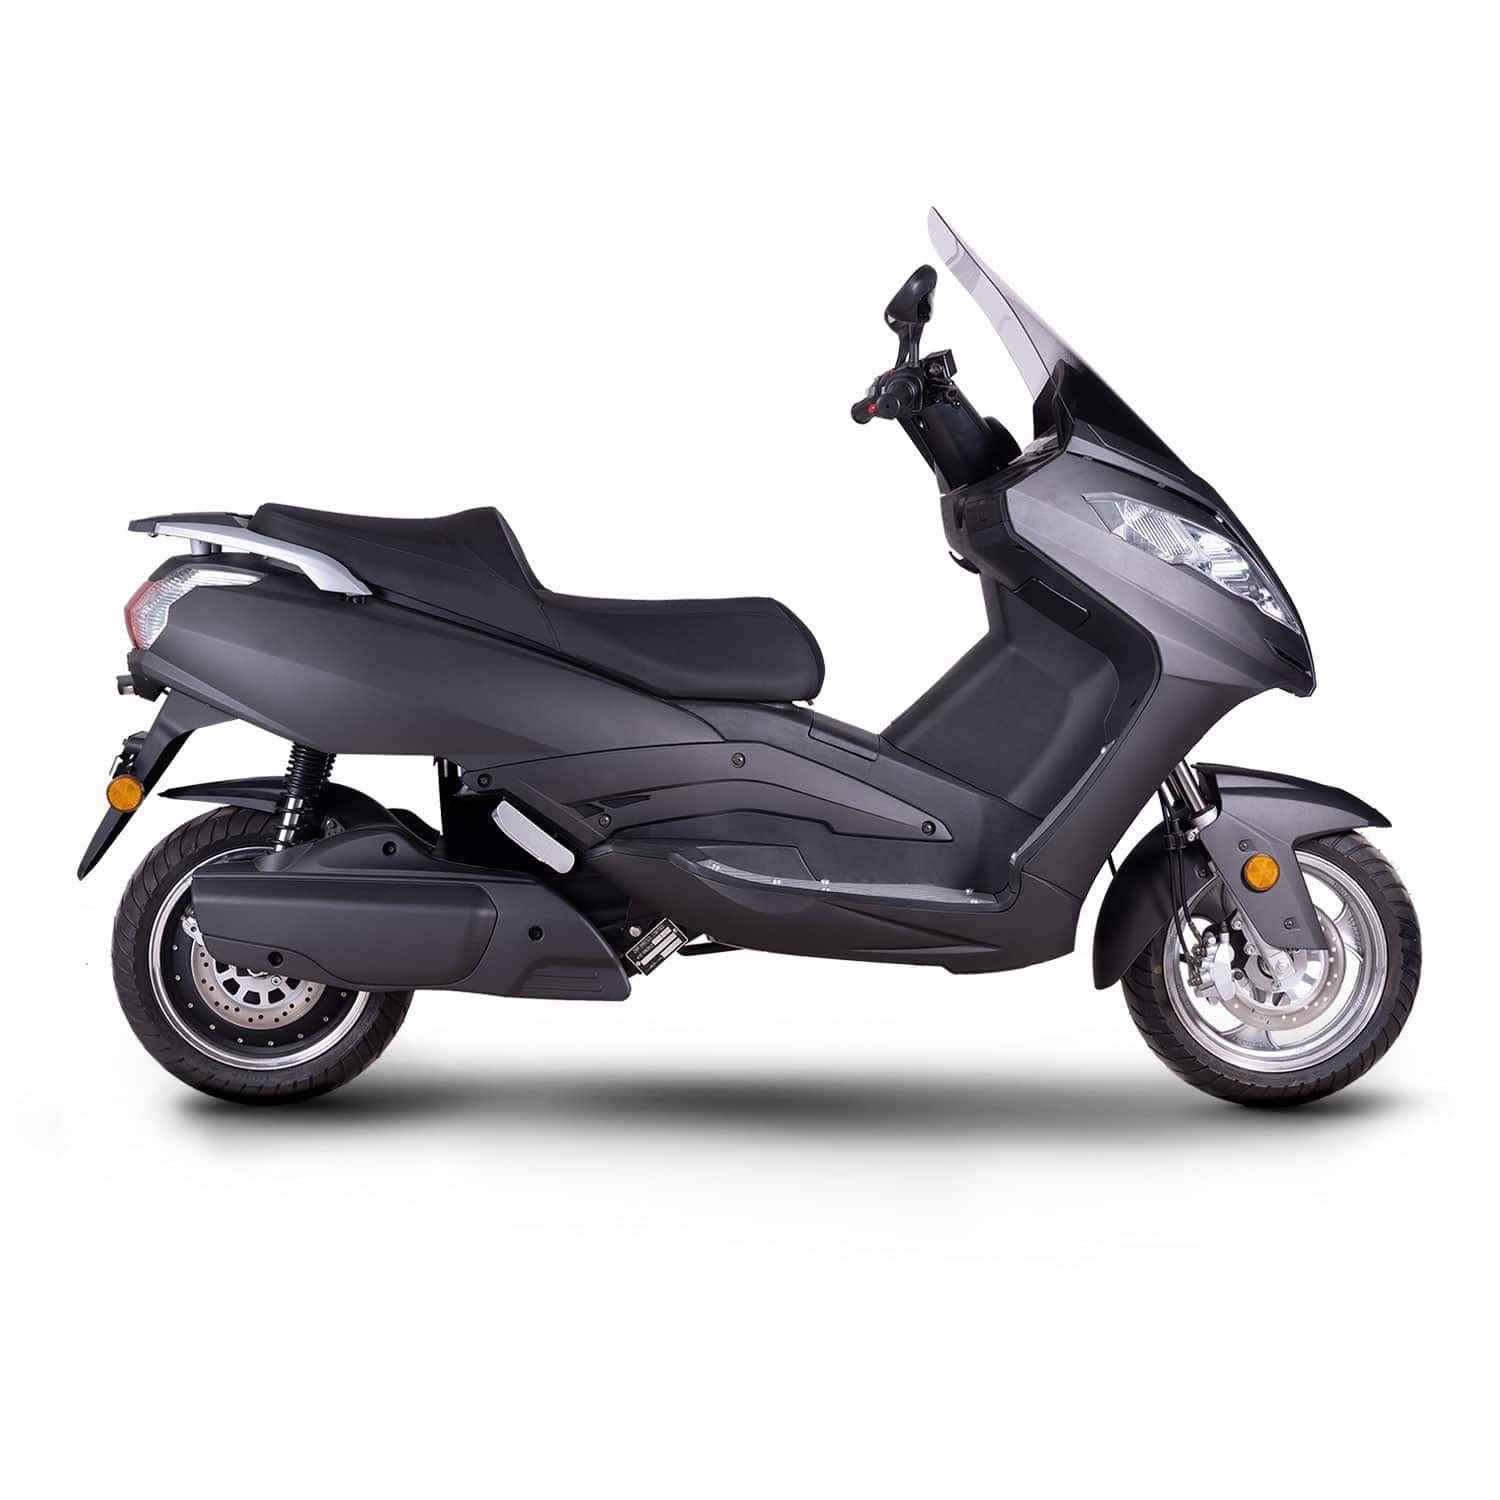 Choisir son tablier scooter - Guide d'achat